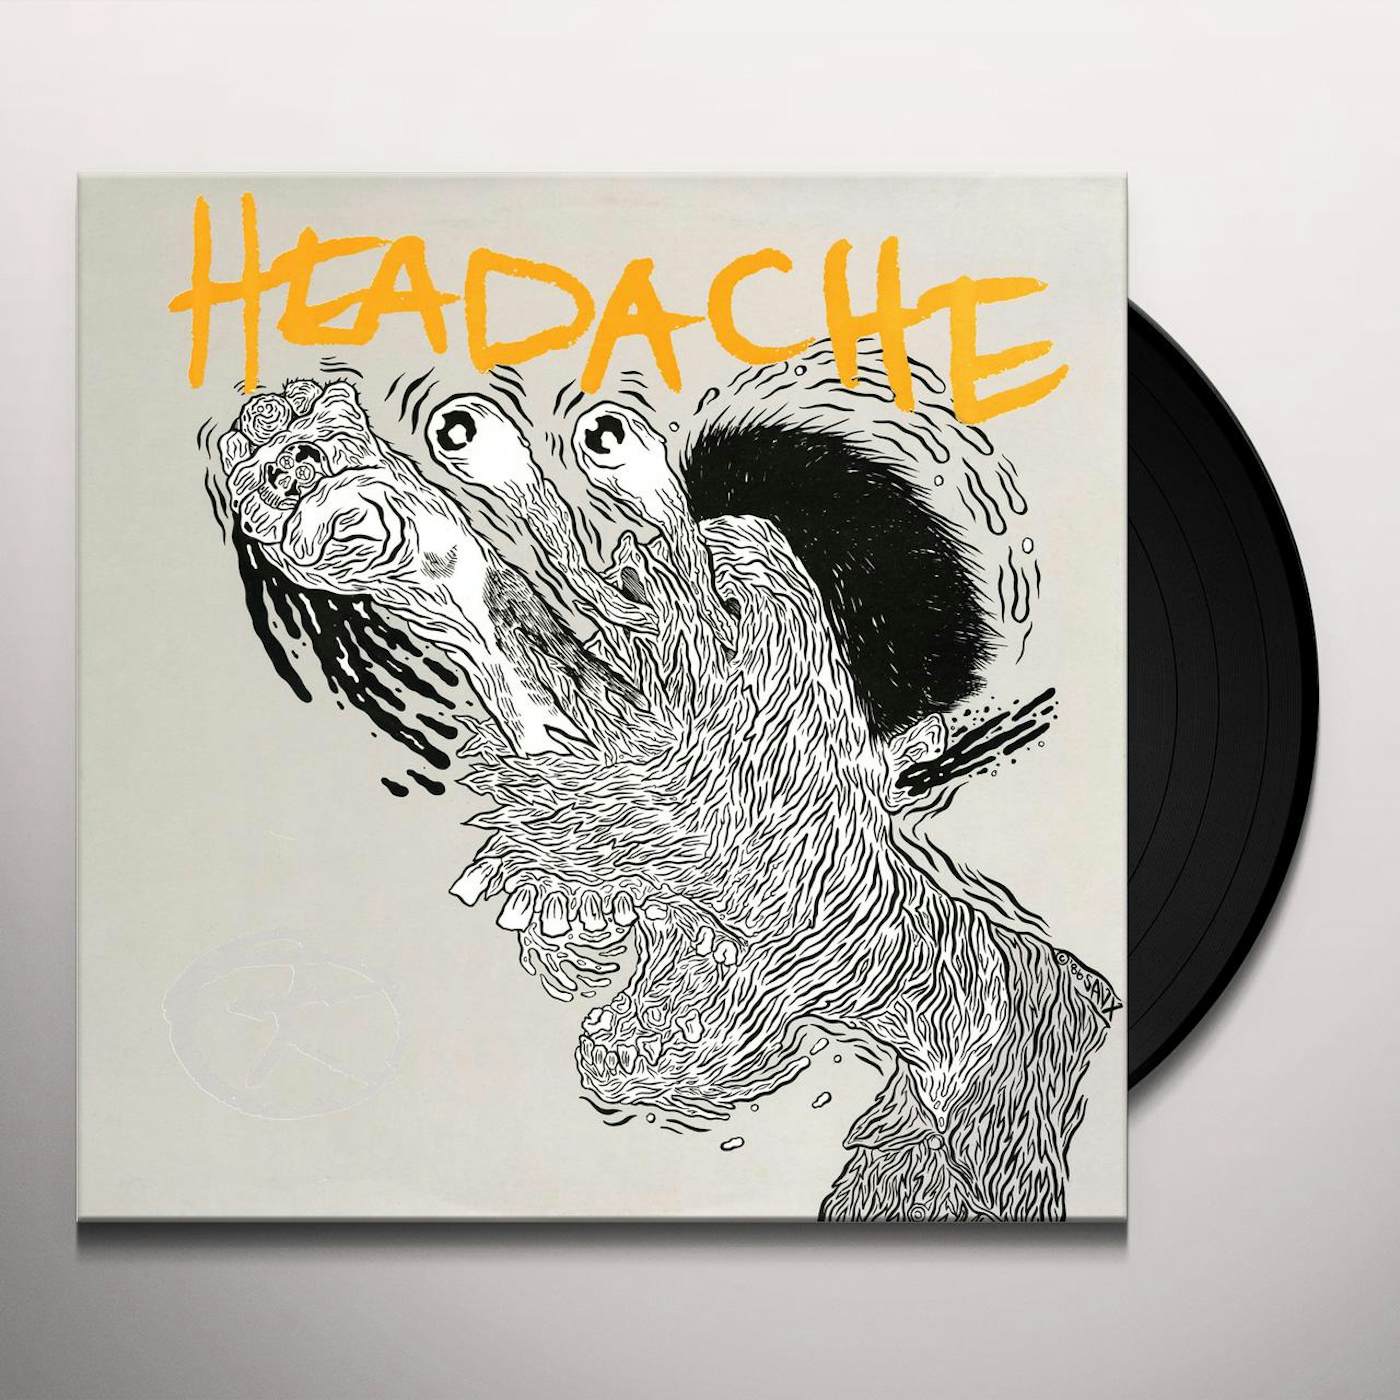 Big Black Headache Vinyl Record